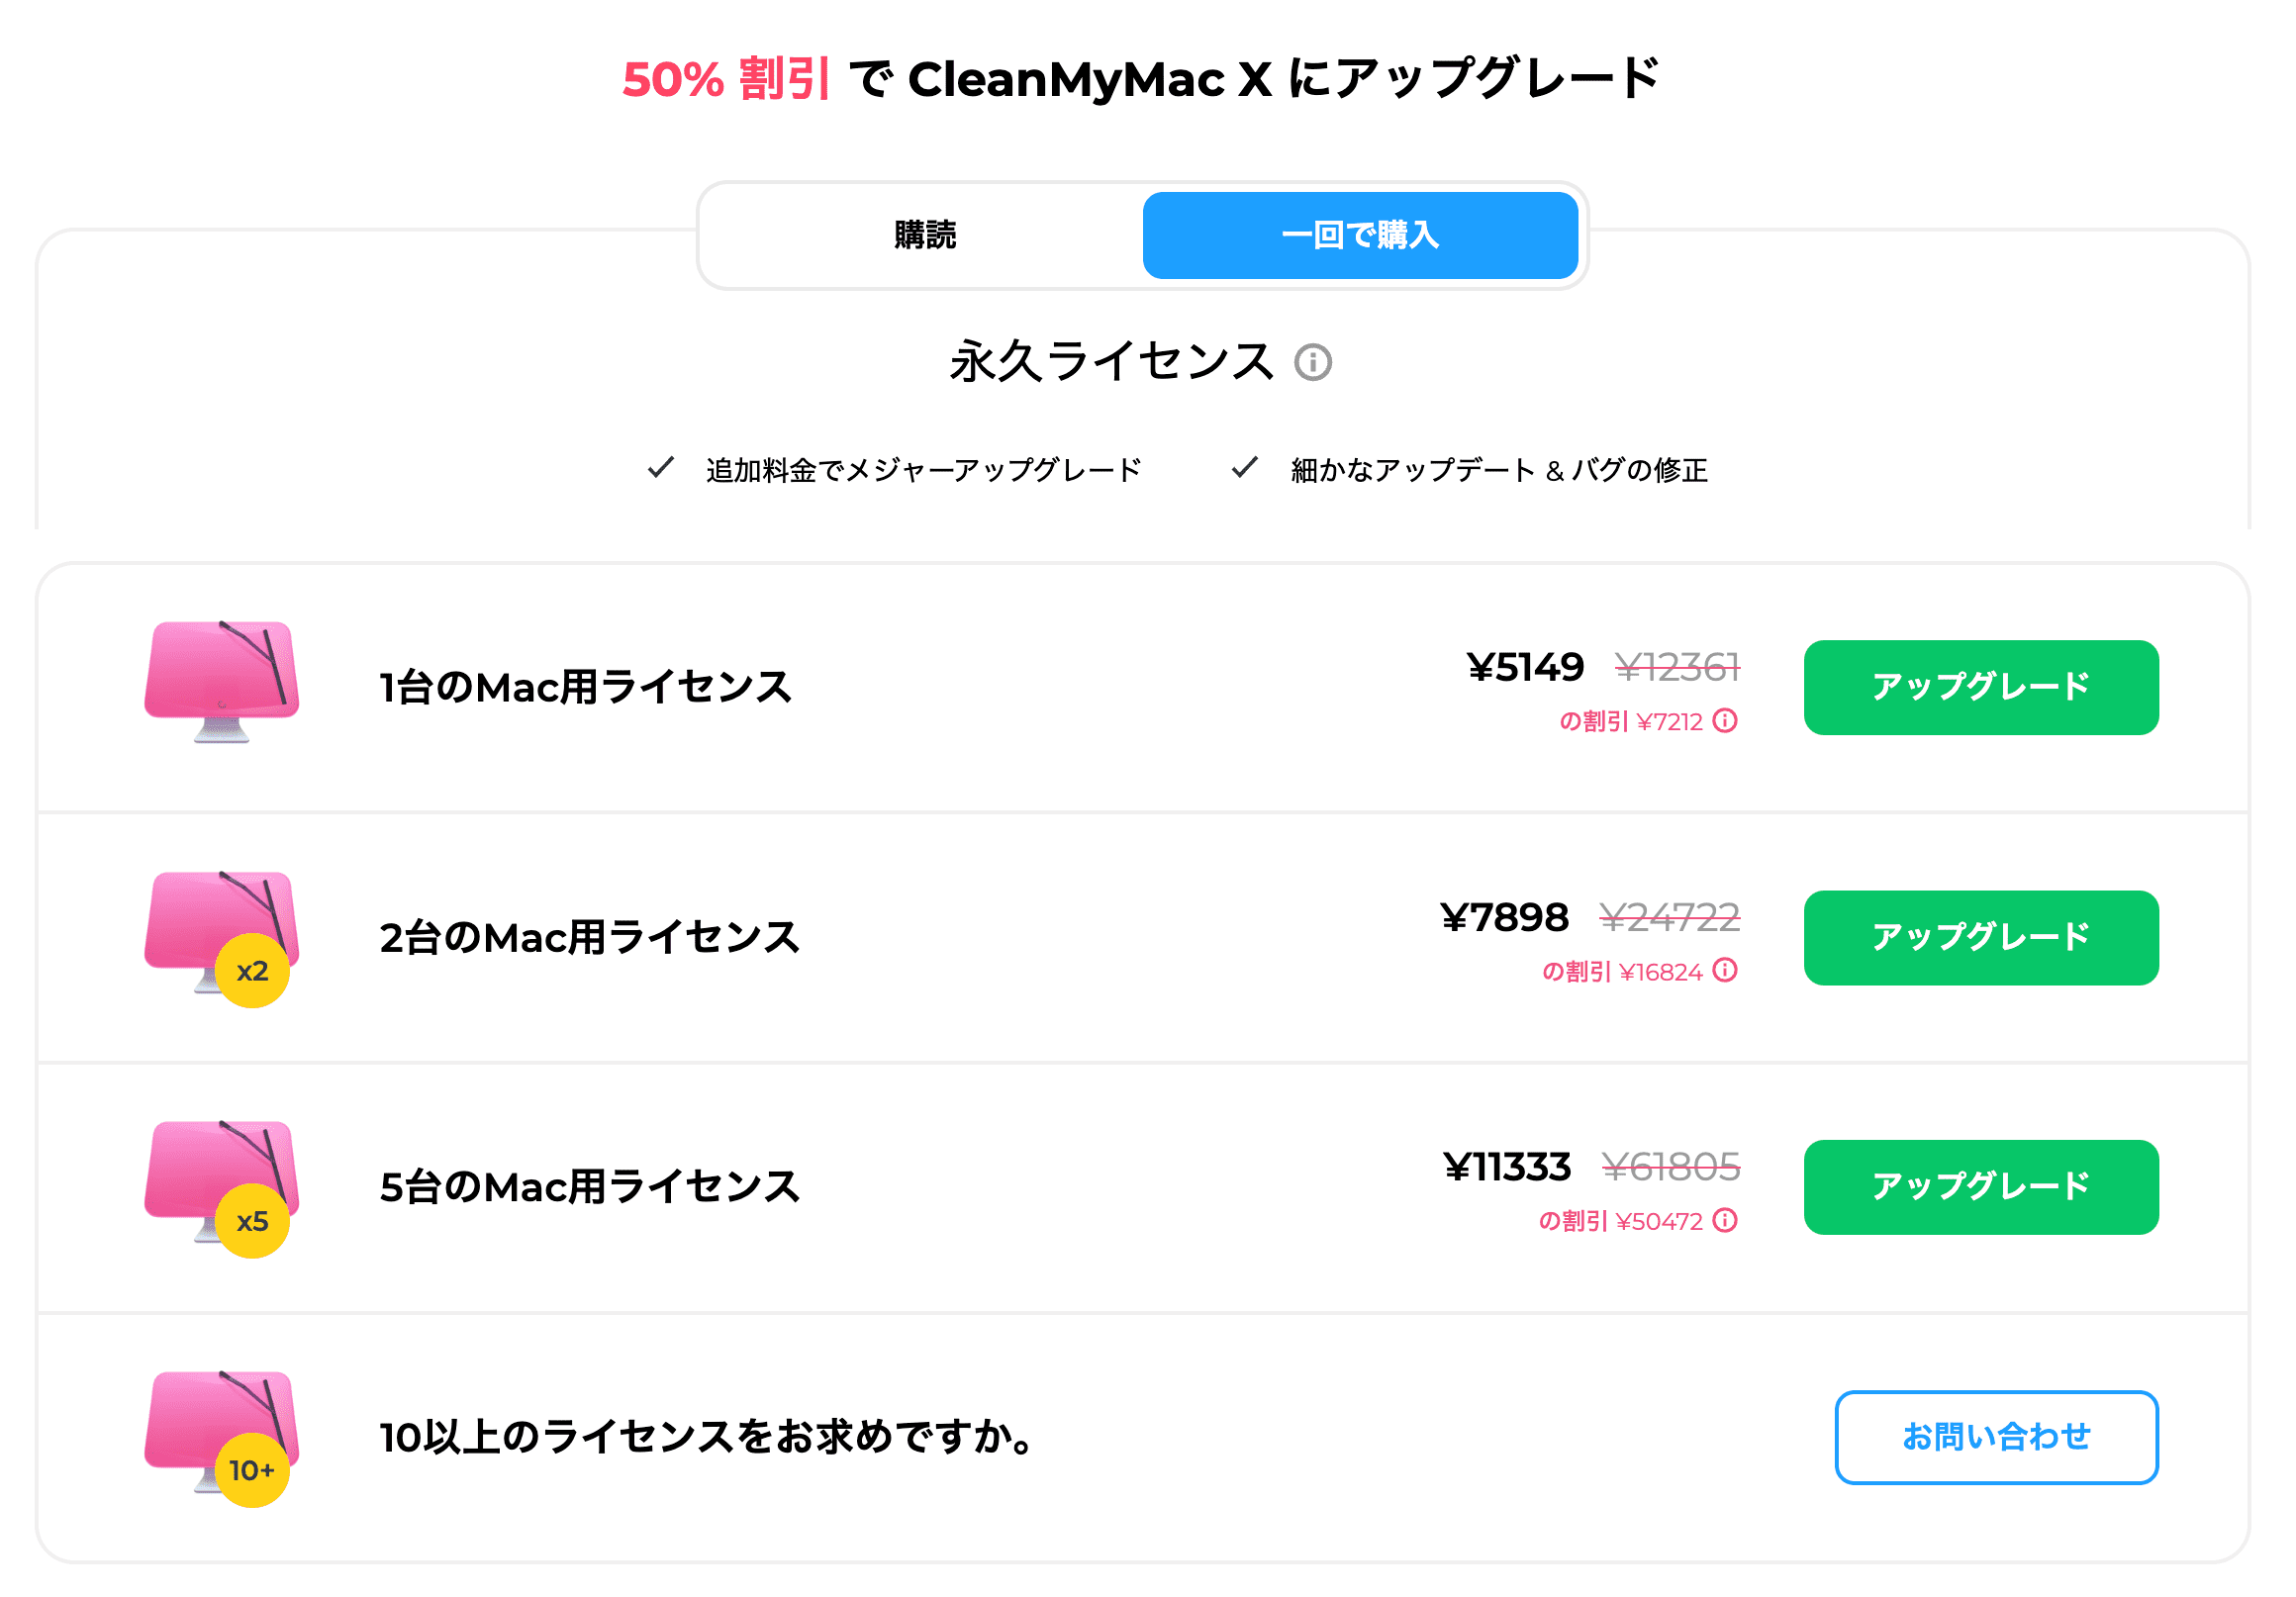 CleanMyMac Xのアップグレード割引